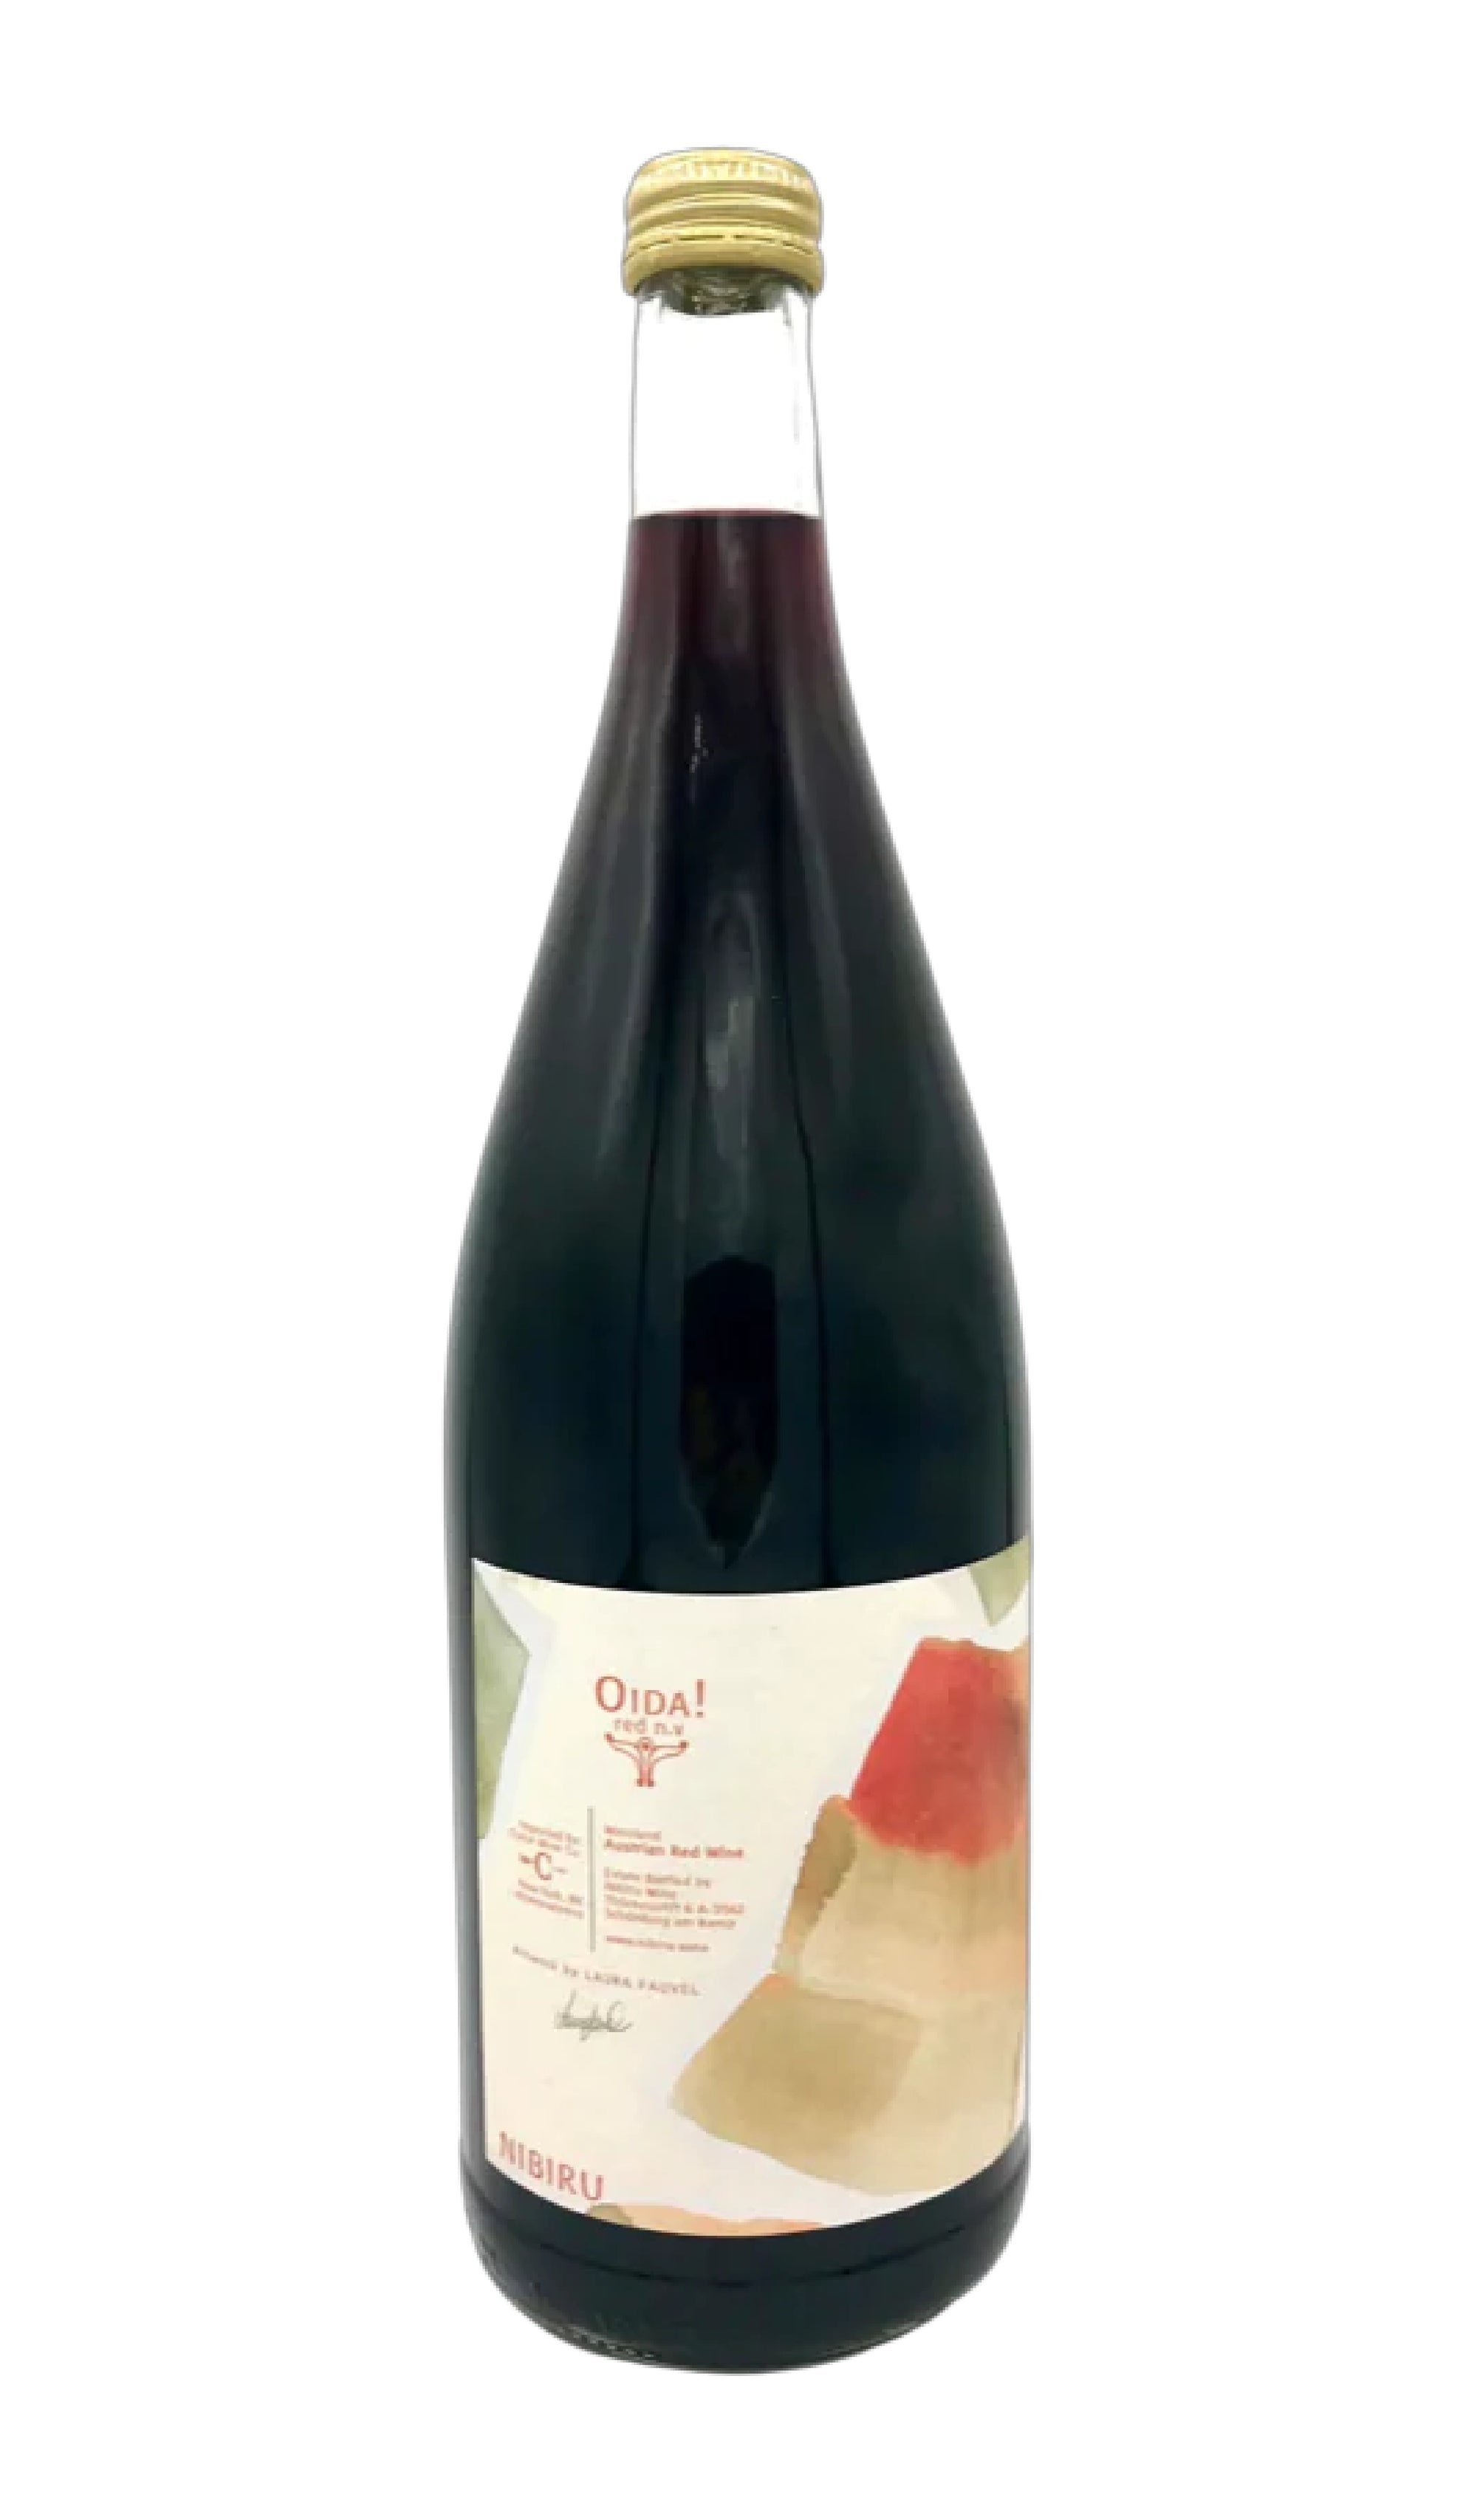 Nibiru Wine - "Oida!" Austria Red Wine NV (1L)